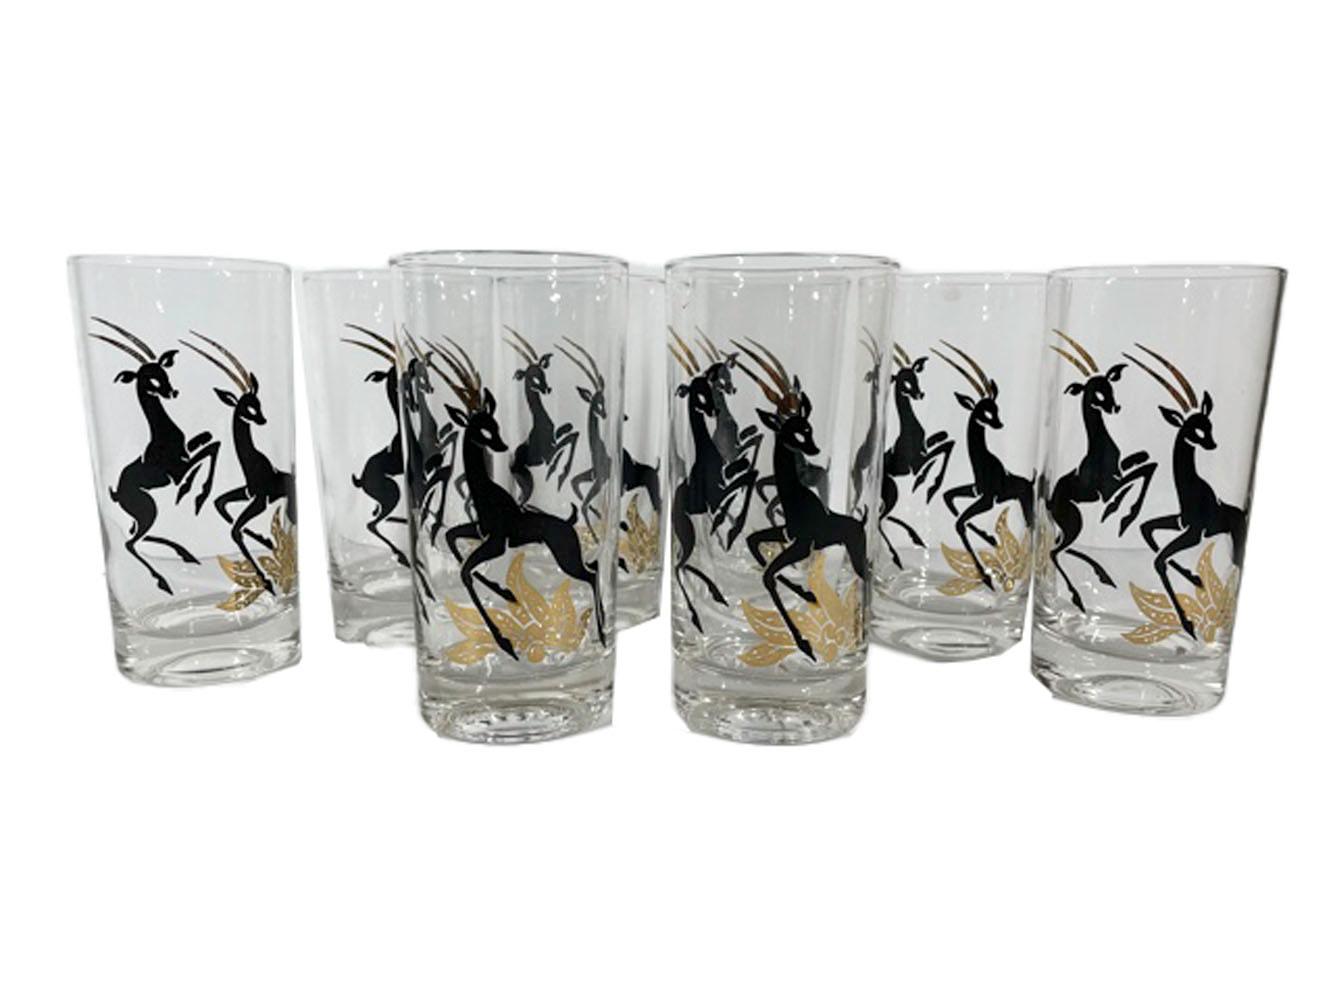 Set of 8 mid-century modern highball glasses with 2 stylized antelopes in black enamel with 22k gold horns.